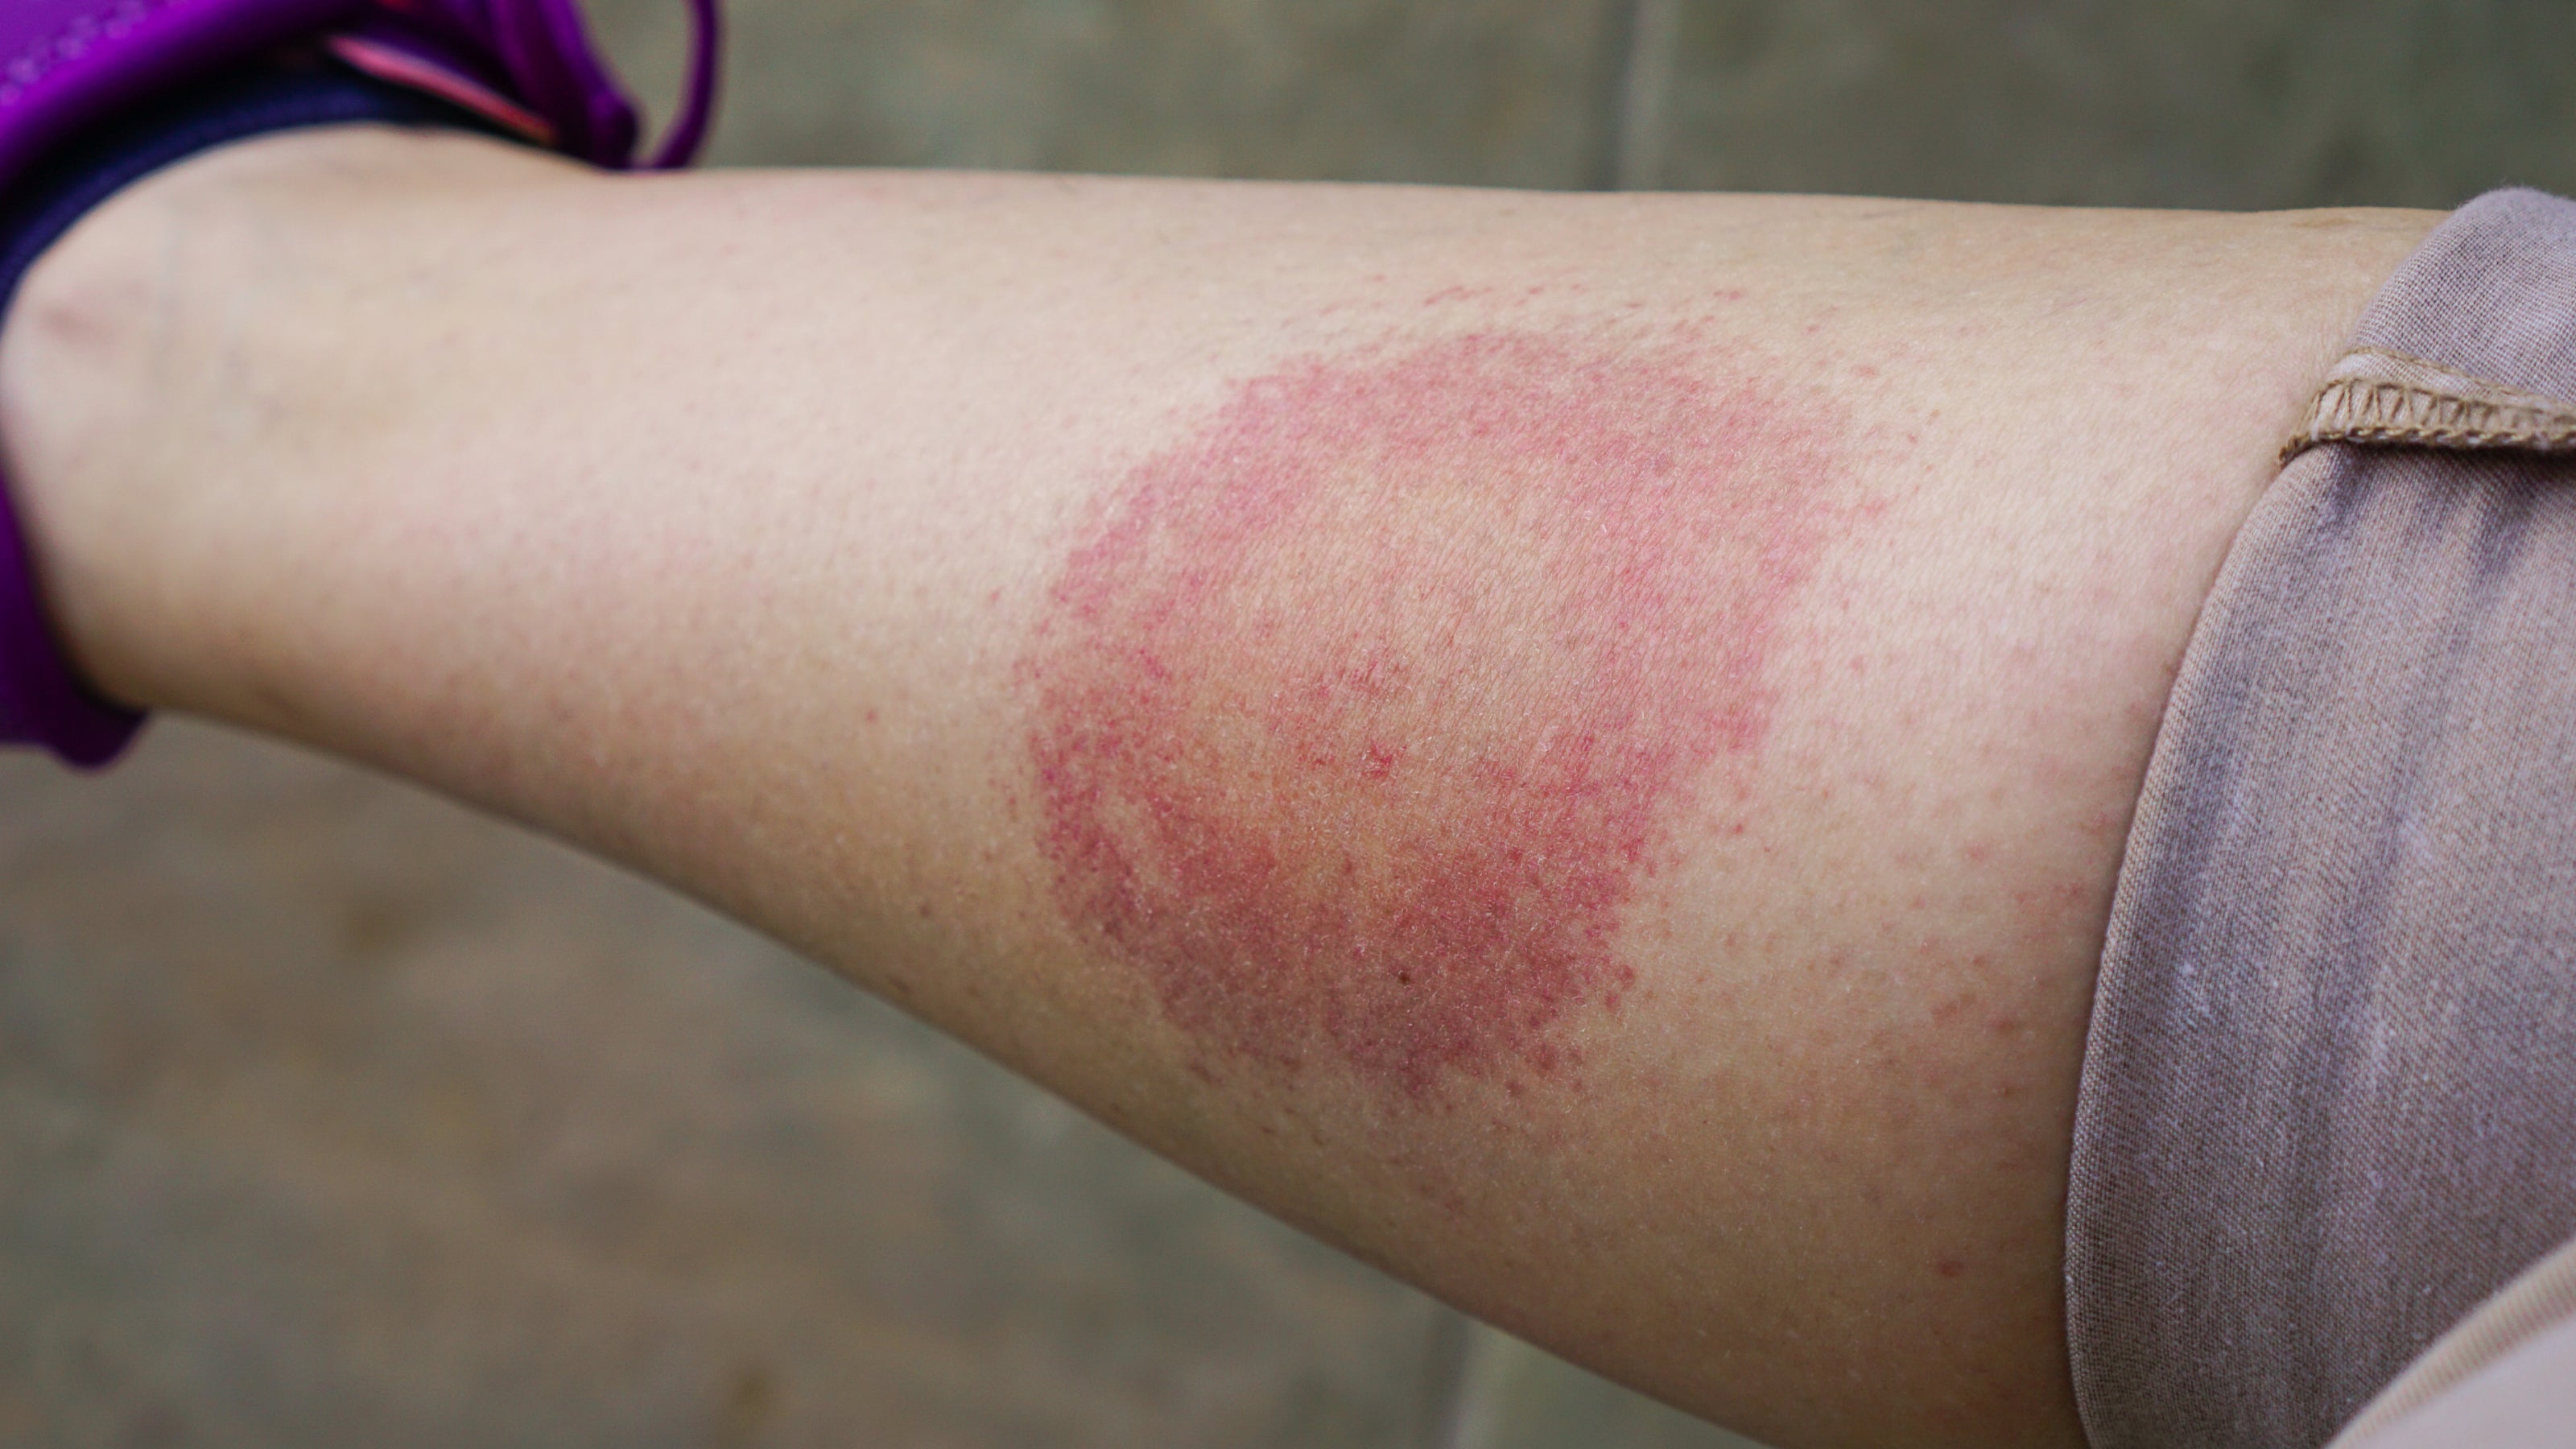 A tick ring rash on a leg